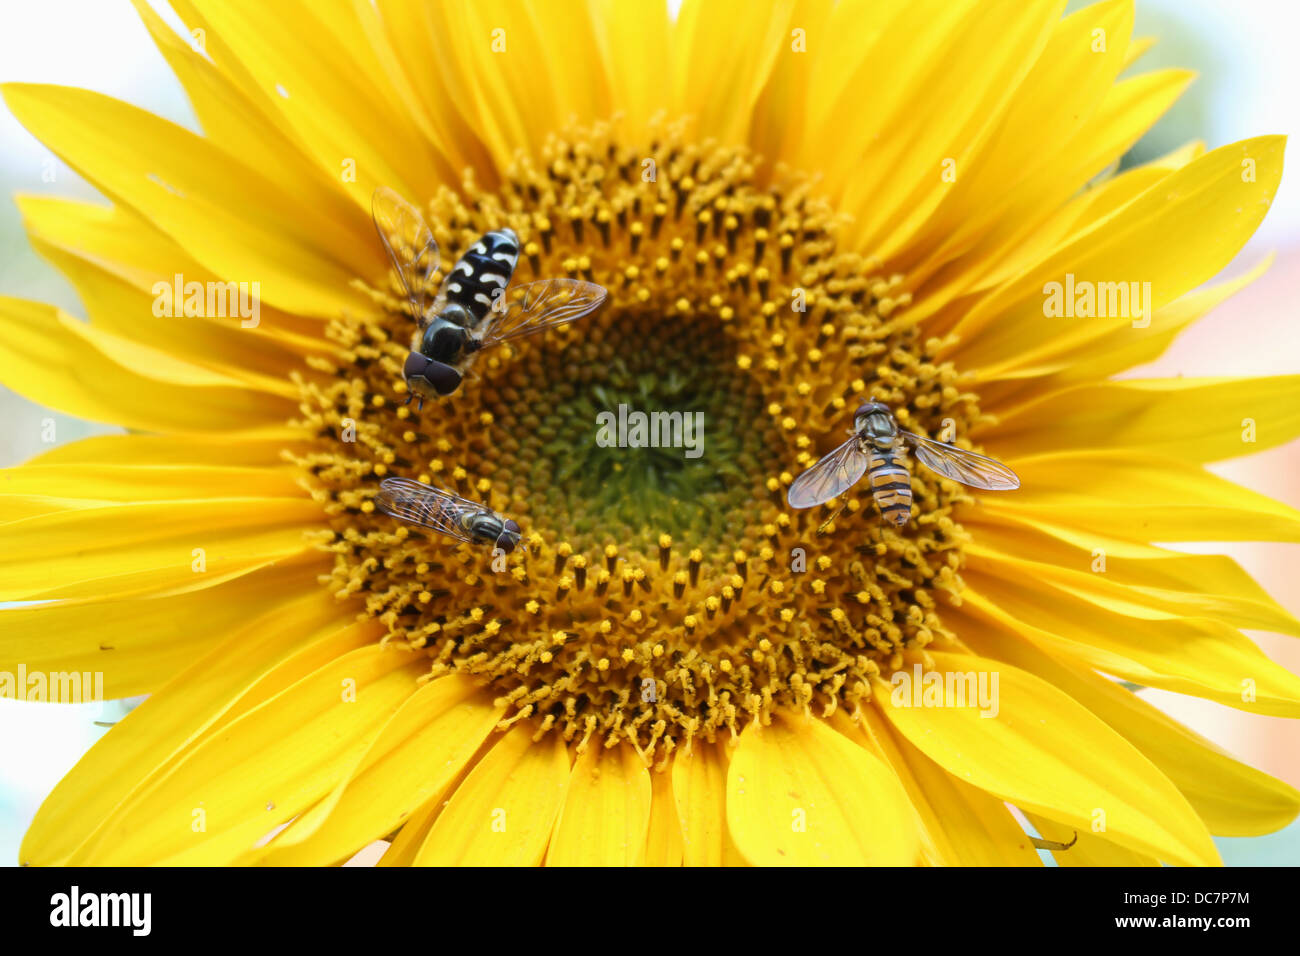 Full-Frame-Sonnenblumen-Kopf mit 3 Insekten Stockfoto